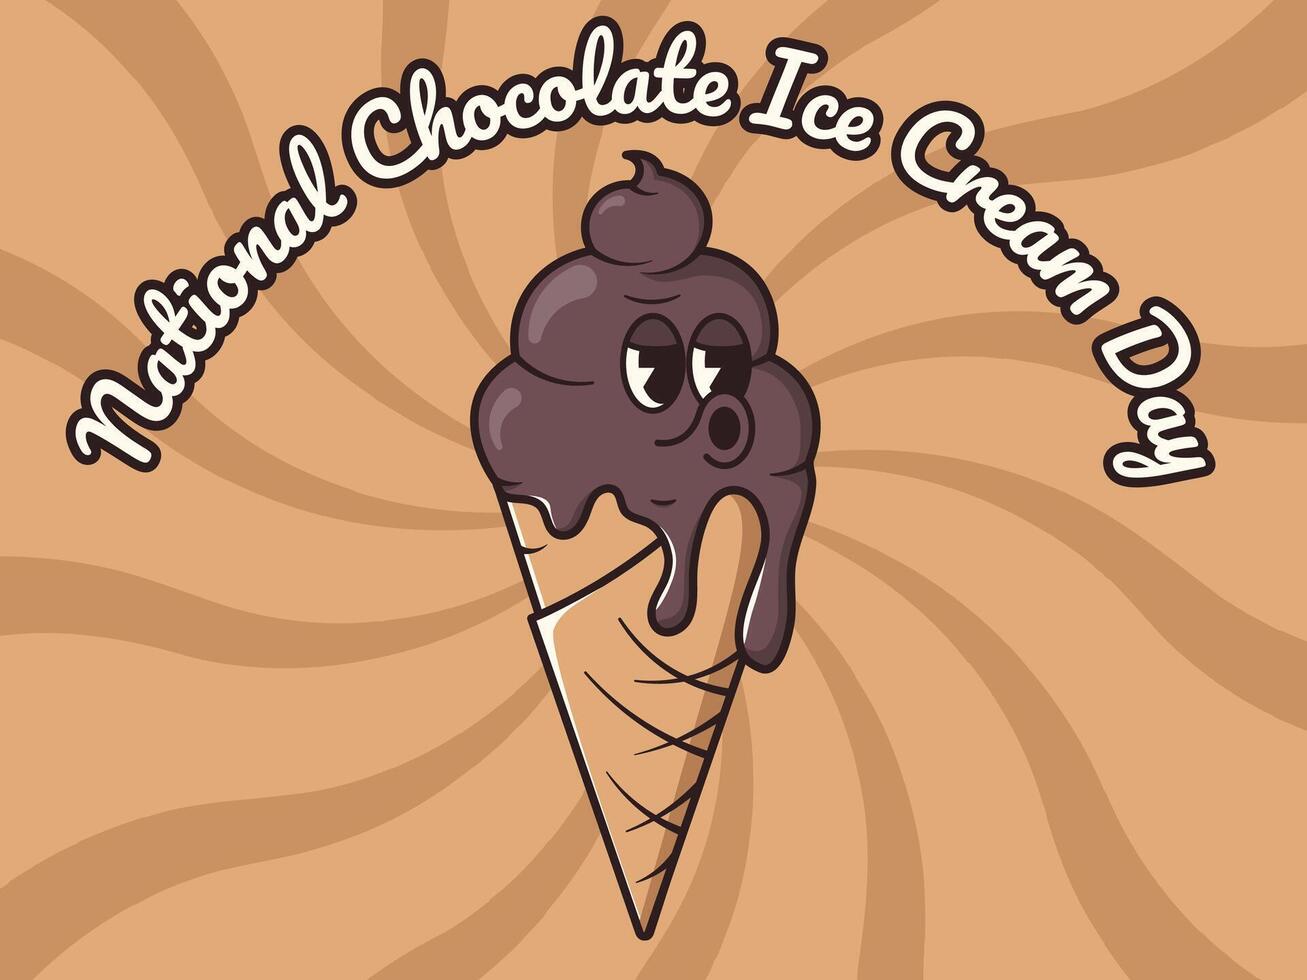 chocolate hielo crema en retro estilo. nacional chocolate hielo crema día vector ilustración con maravilloso mascota